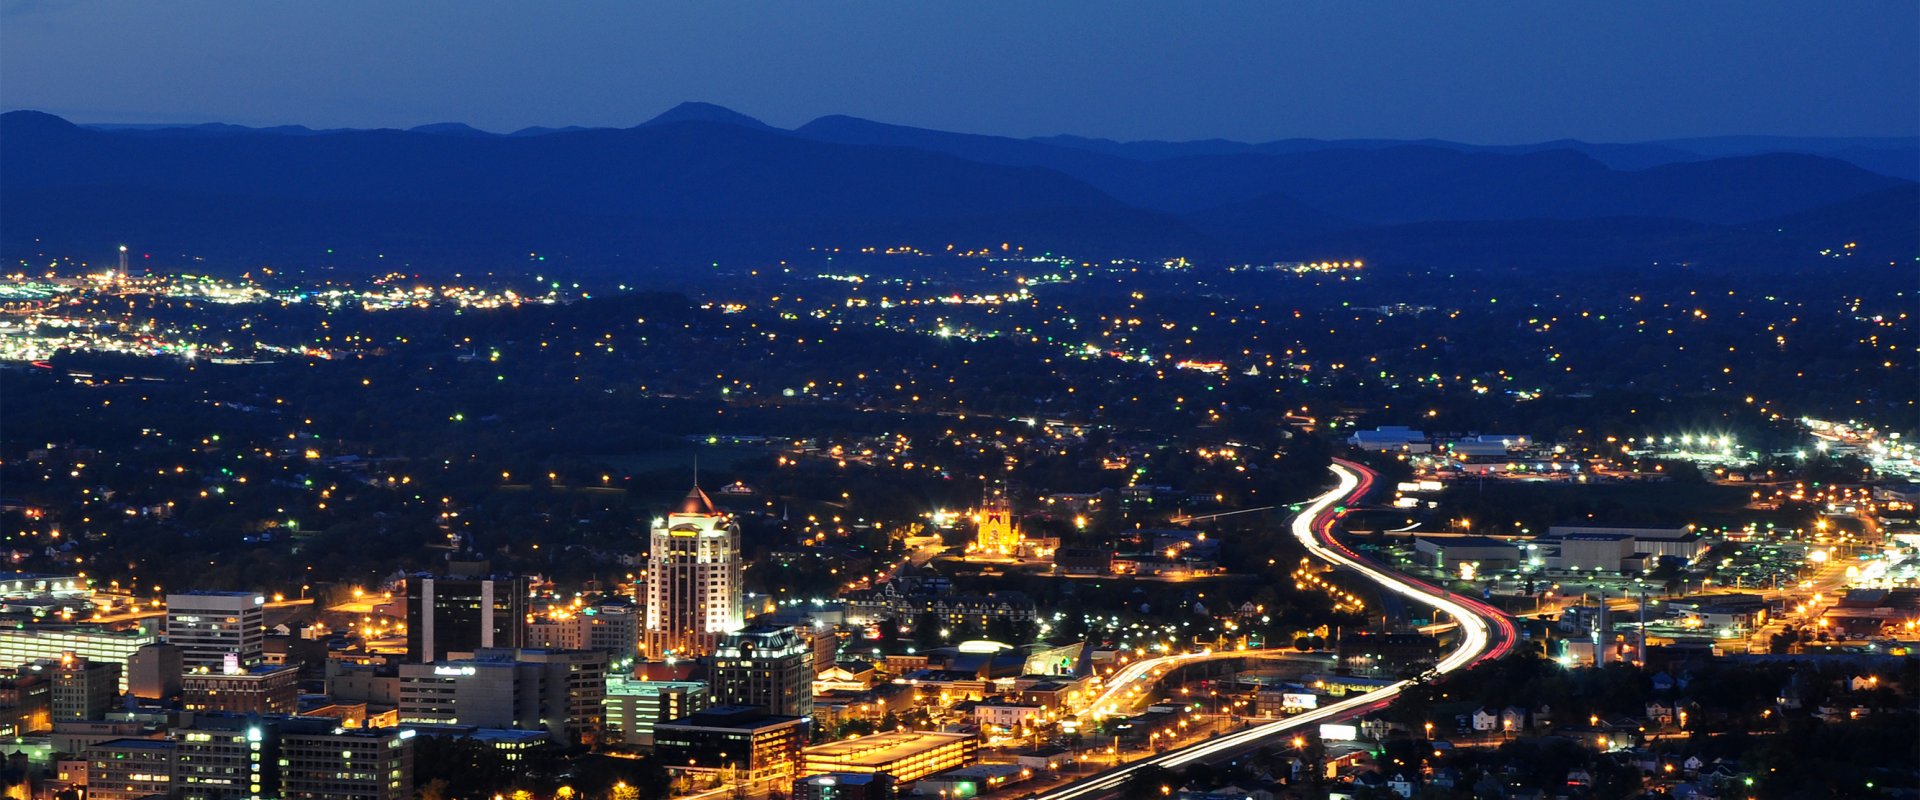 skyline of Roanoke Virginia at night